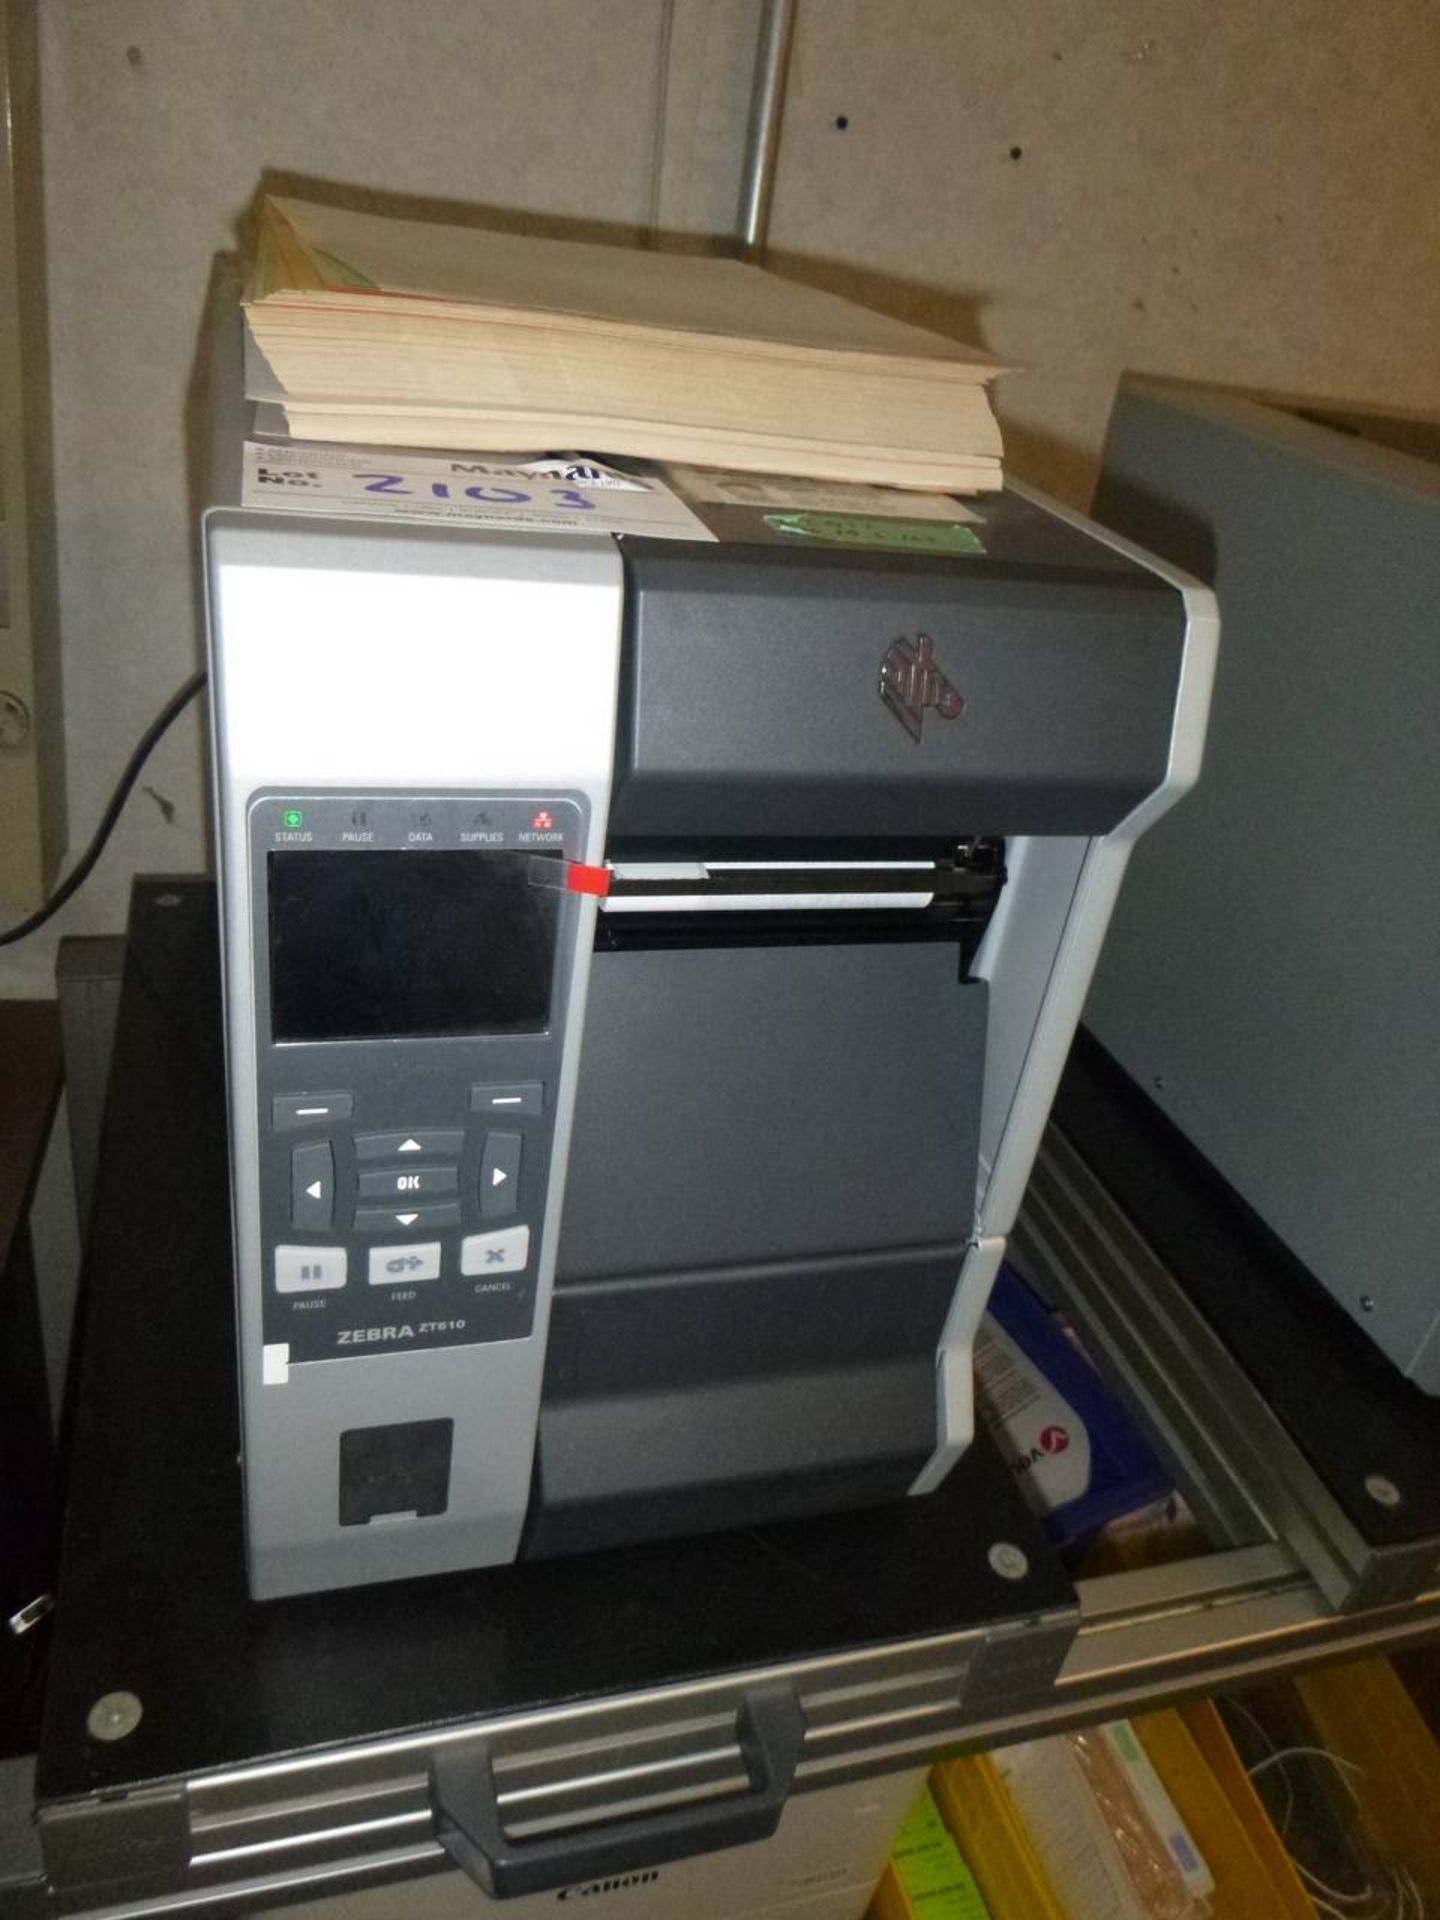 Zebra ZT610 Label printer